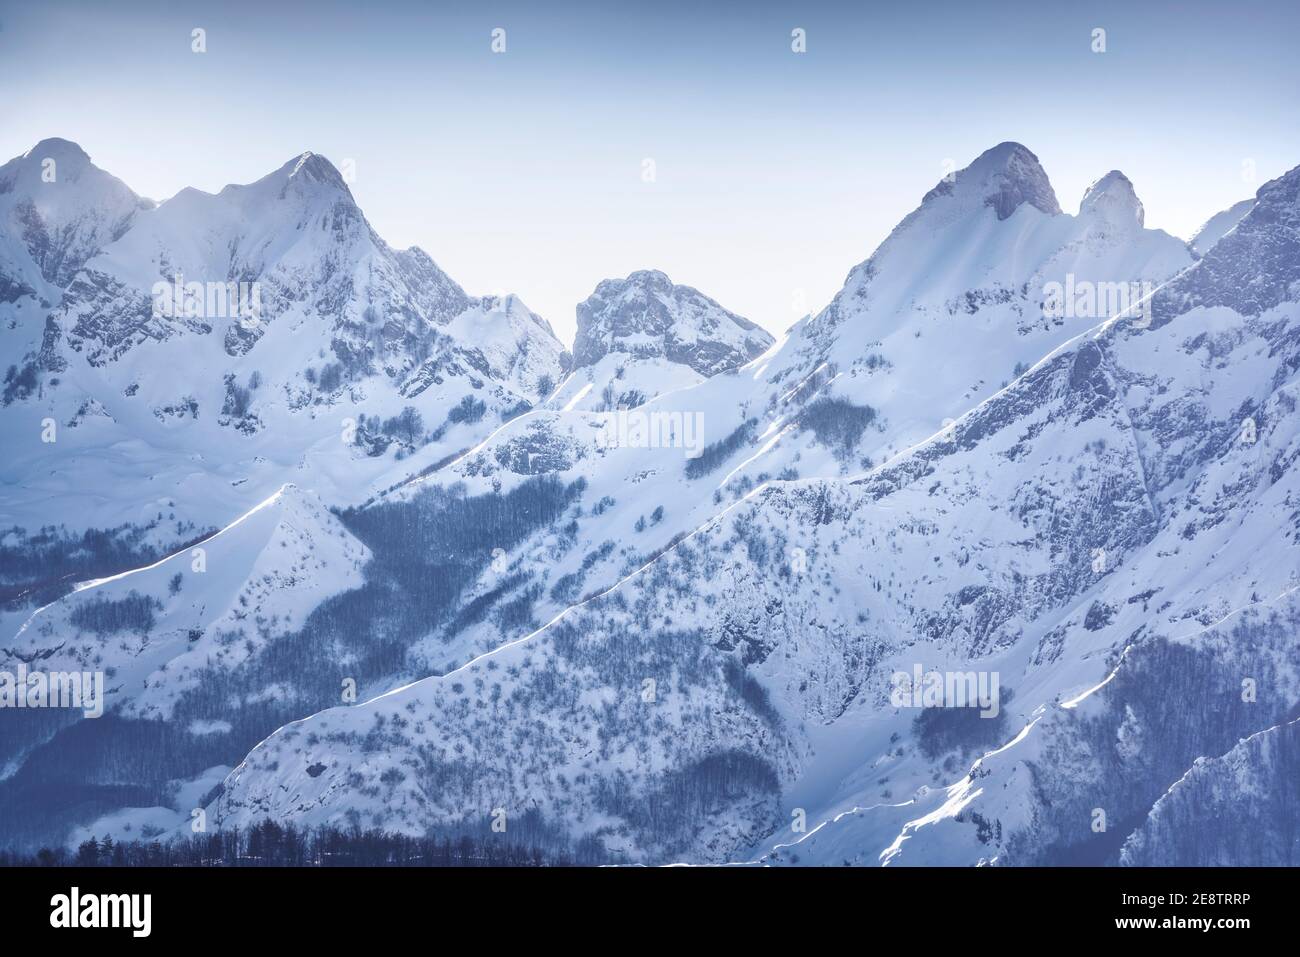 Apuane alpi or Apuan alps snowy mountains in winter. Garfagnana, Tuscany, Italy. Stock Photo